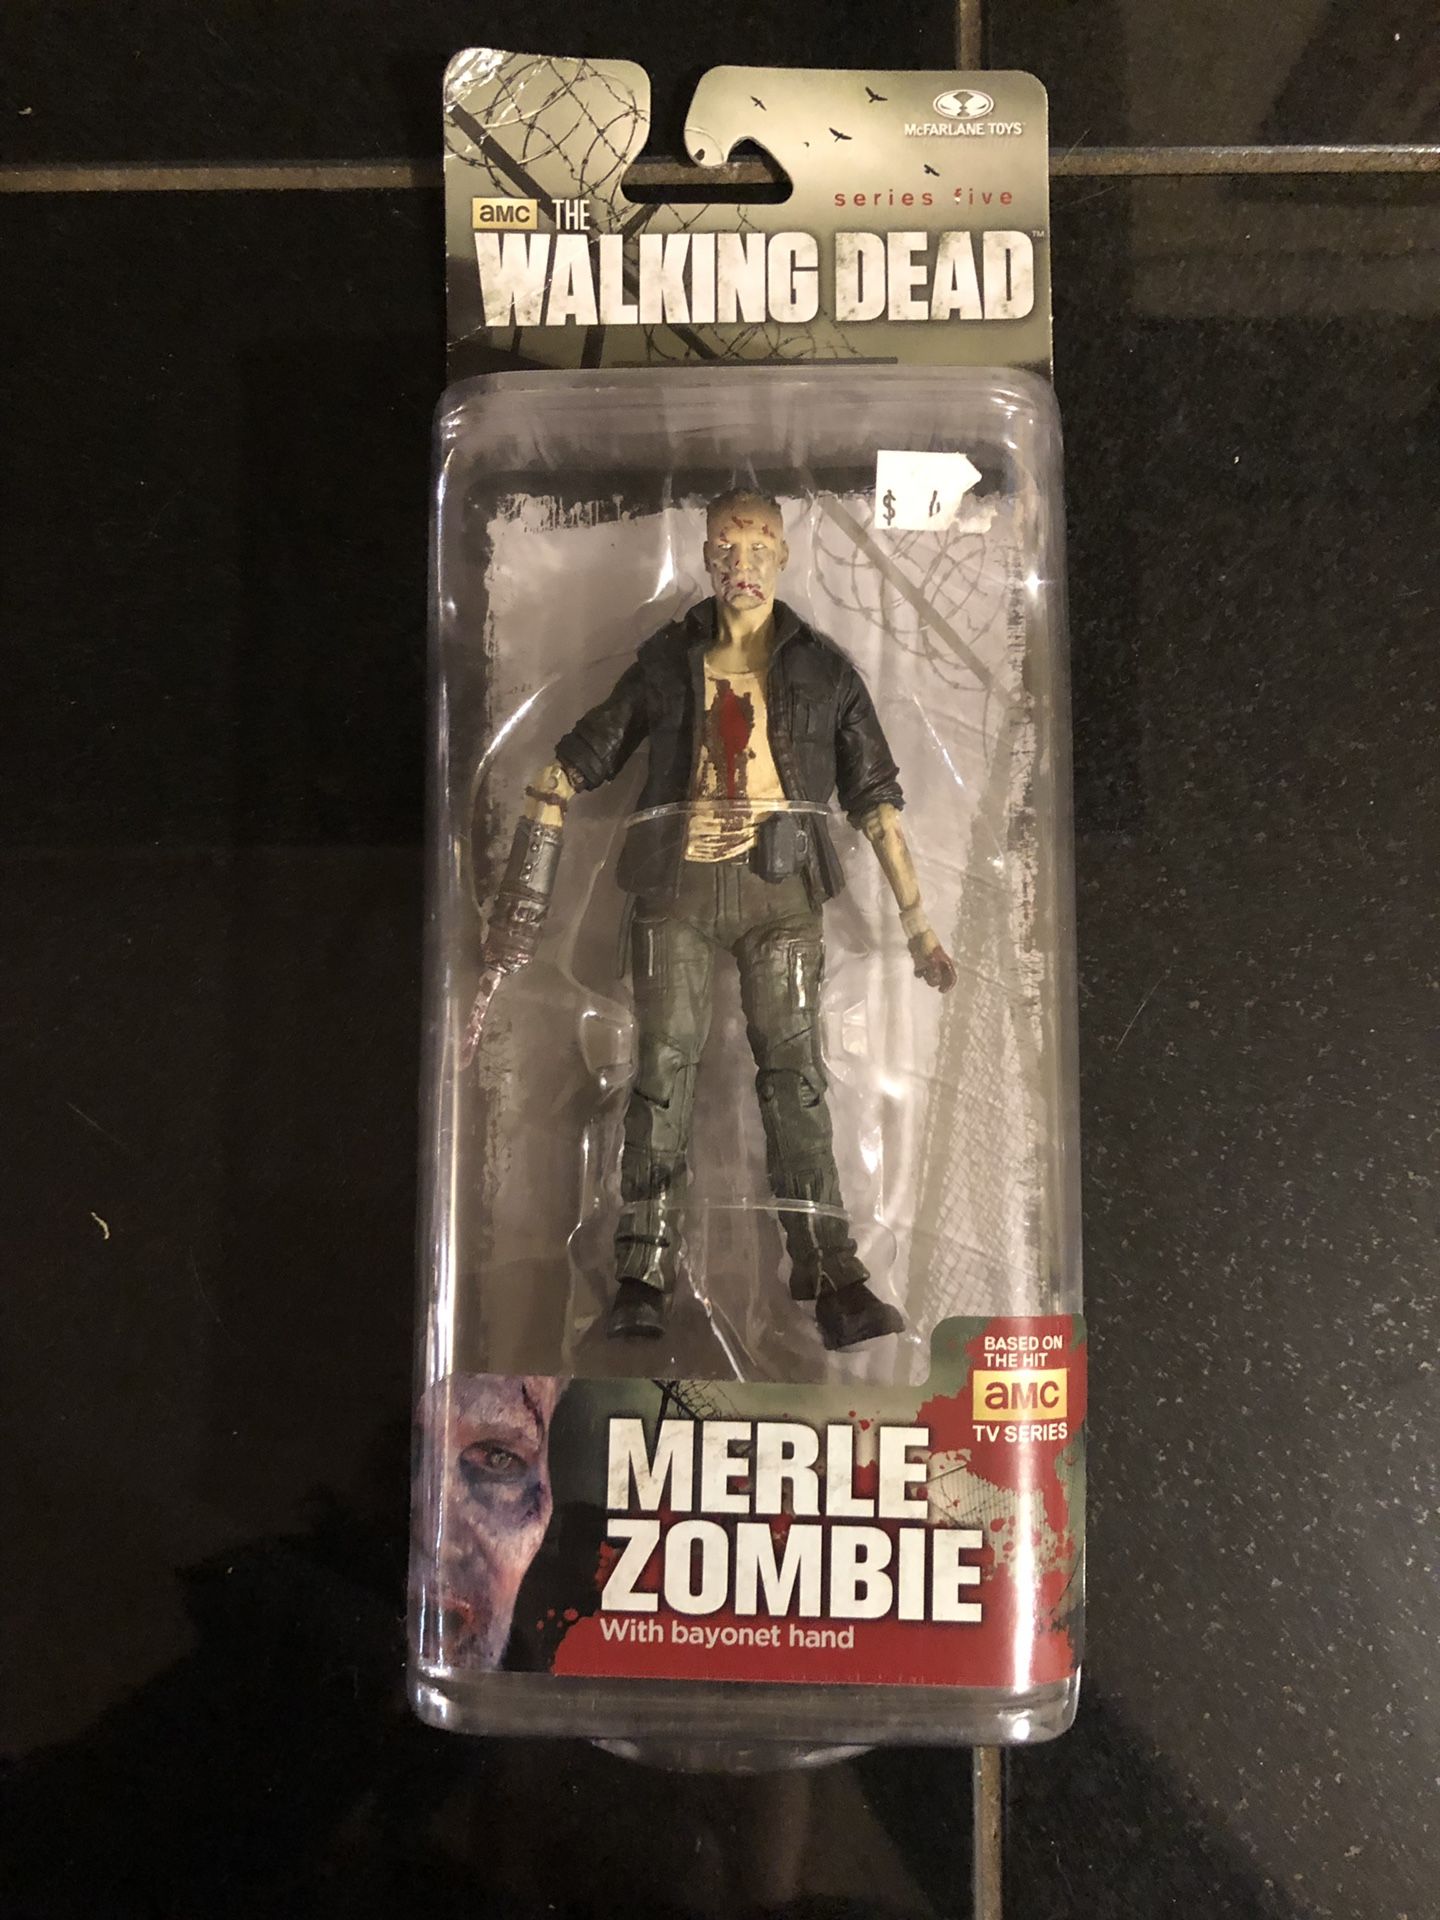 The Walking Dead Merle zombie action figure